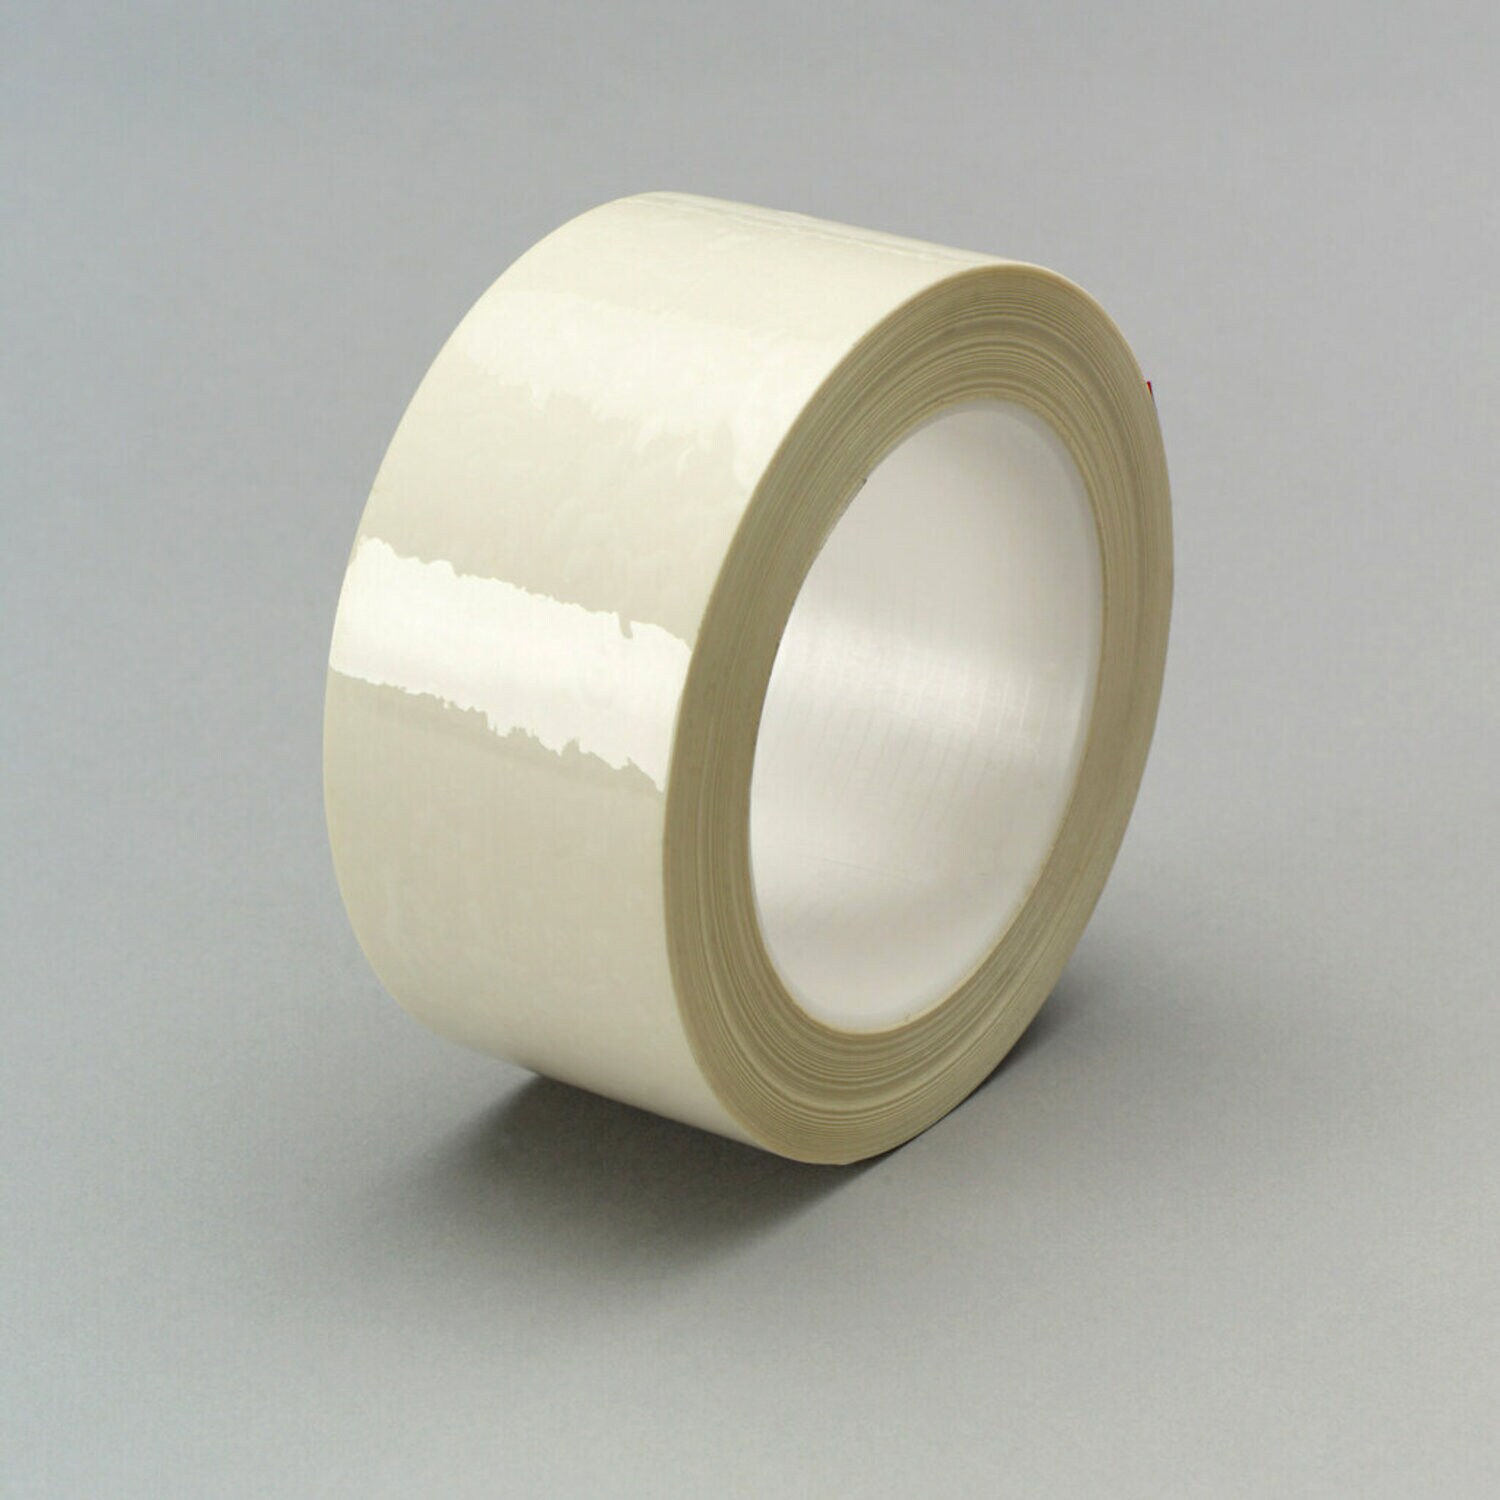 7000123318 - 3M High Temperature Nylon Film Tape 855, White, 3/4 in x 72 yd, 3.6
mil, 48 rolls per case